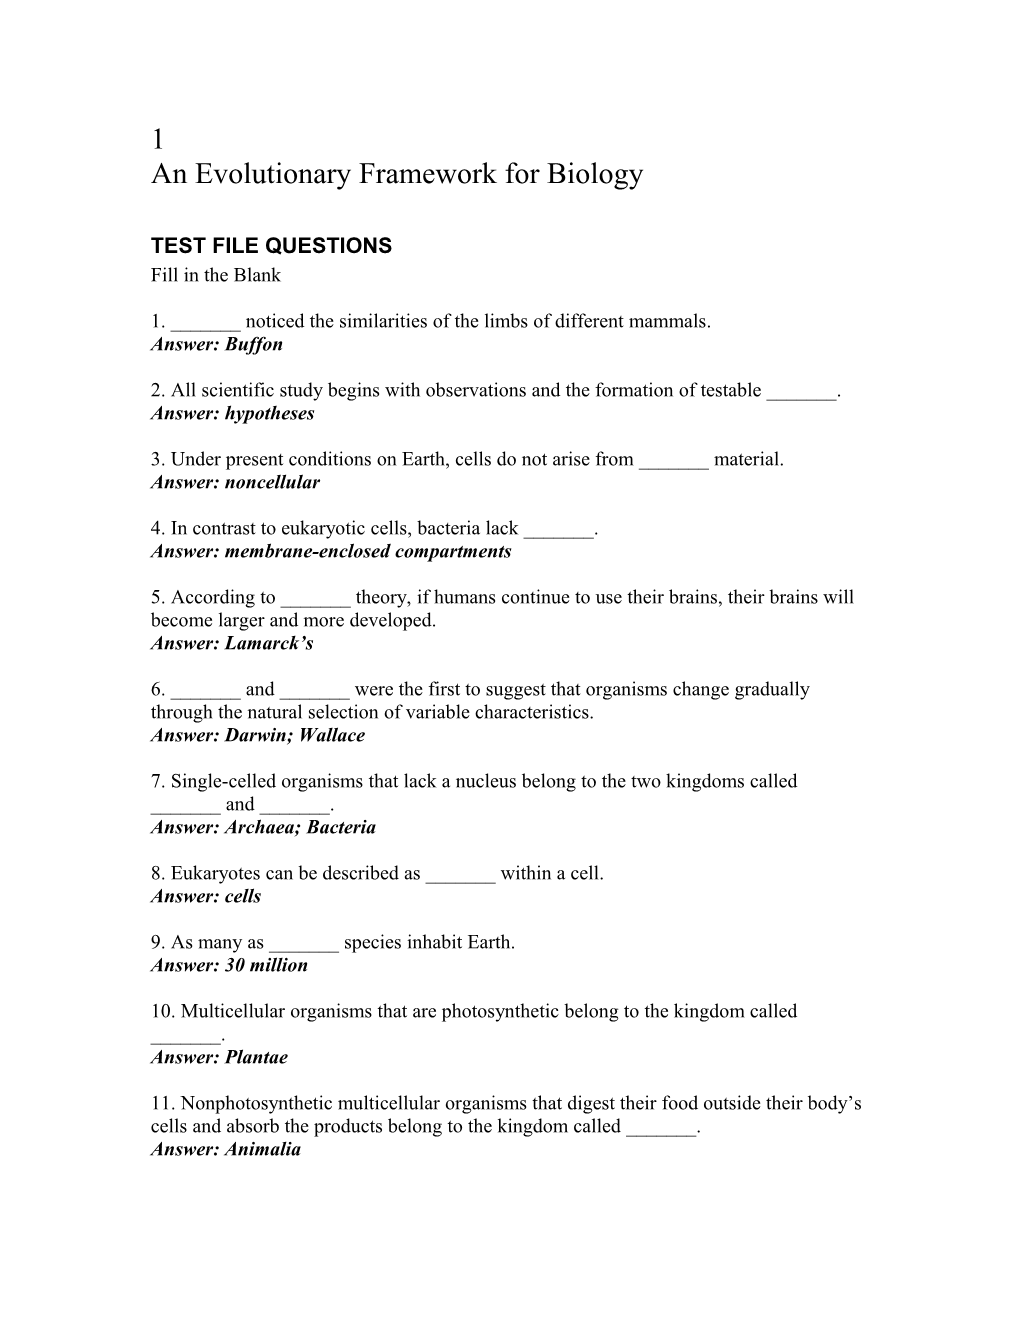 An Evolutionary Framework for Biology